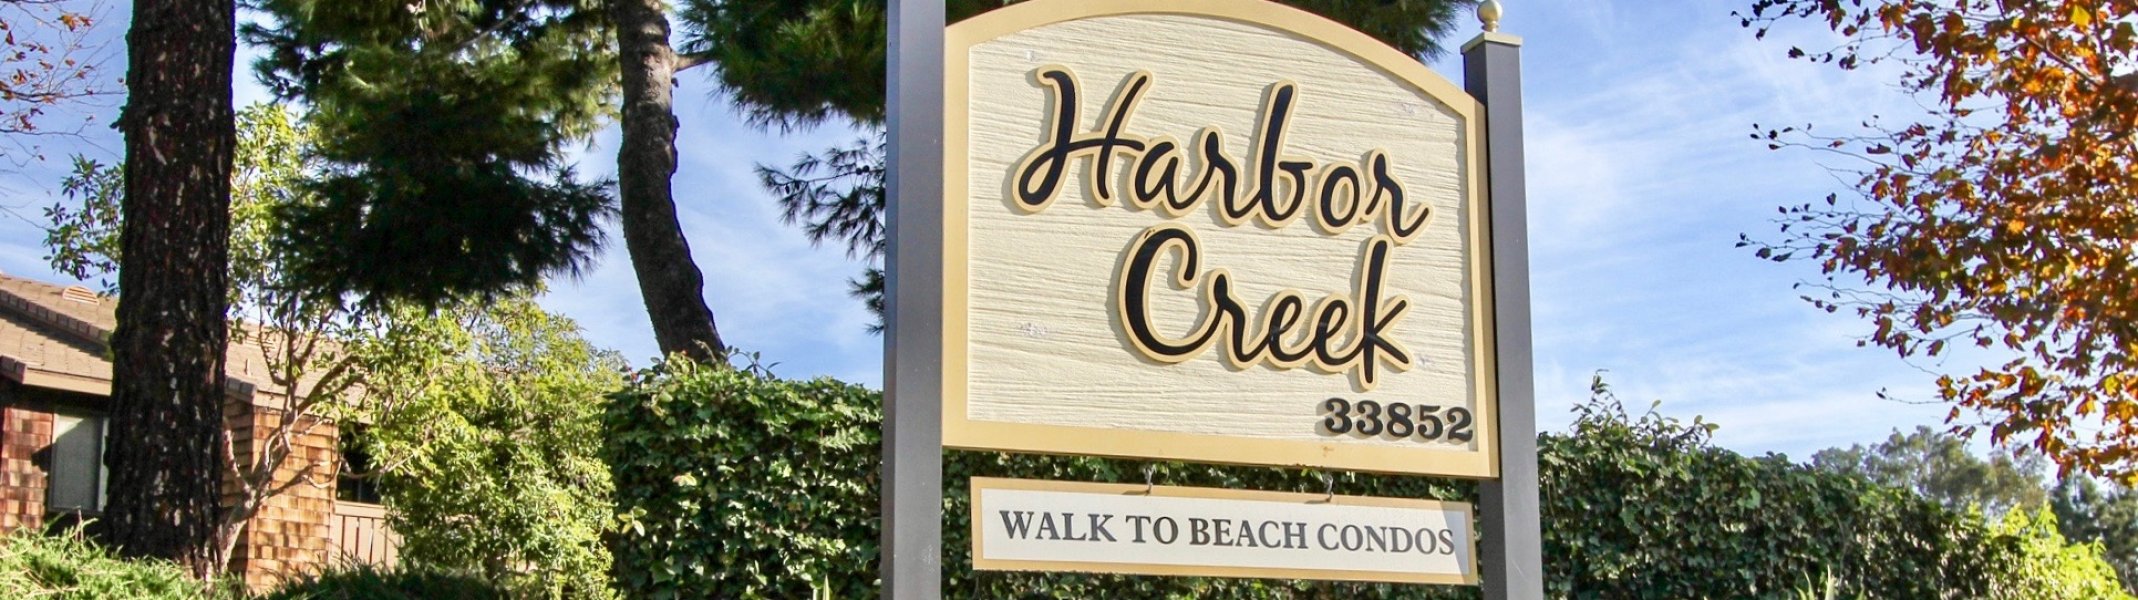 Harbor Creek